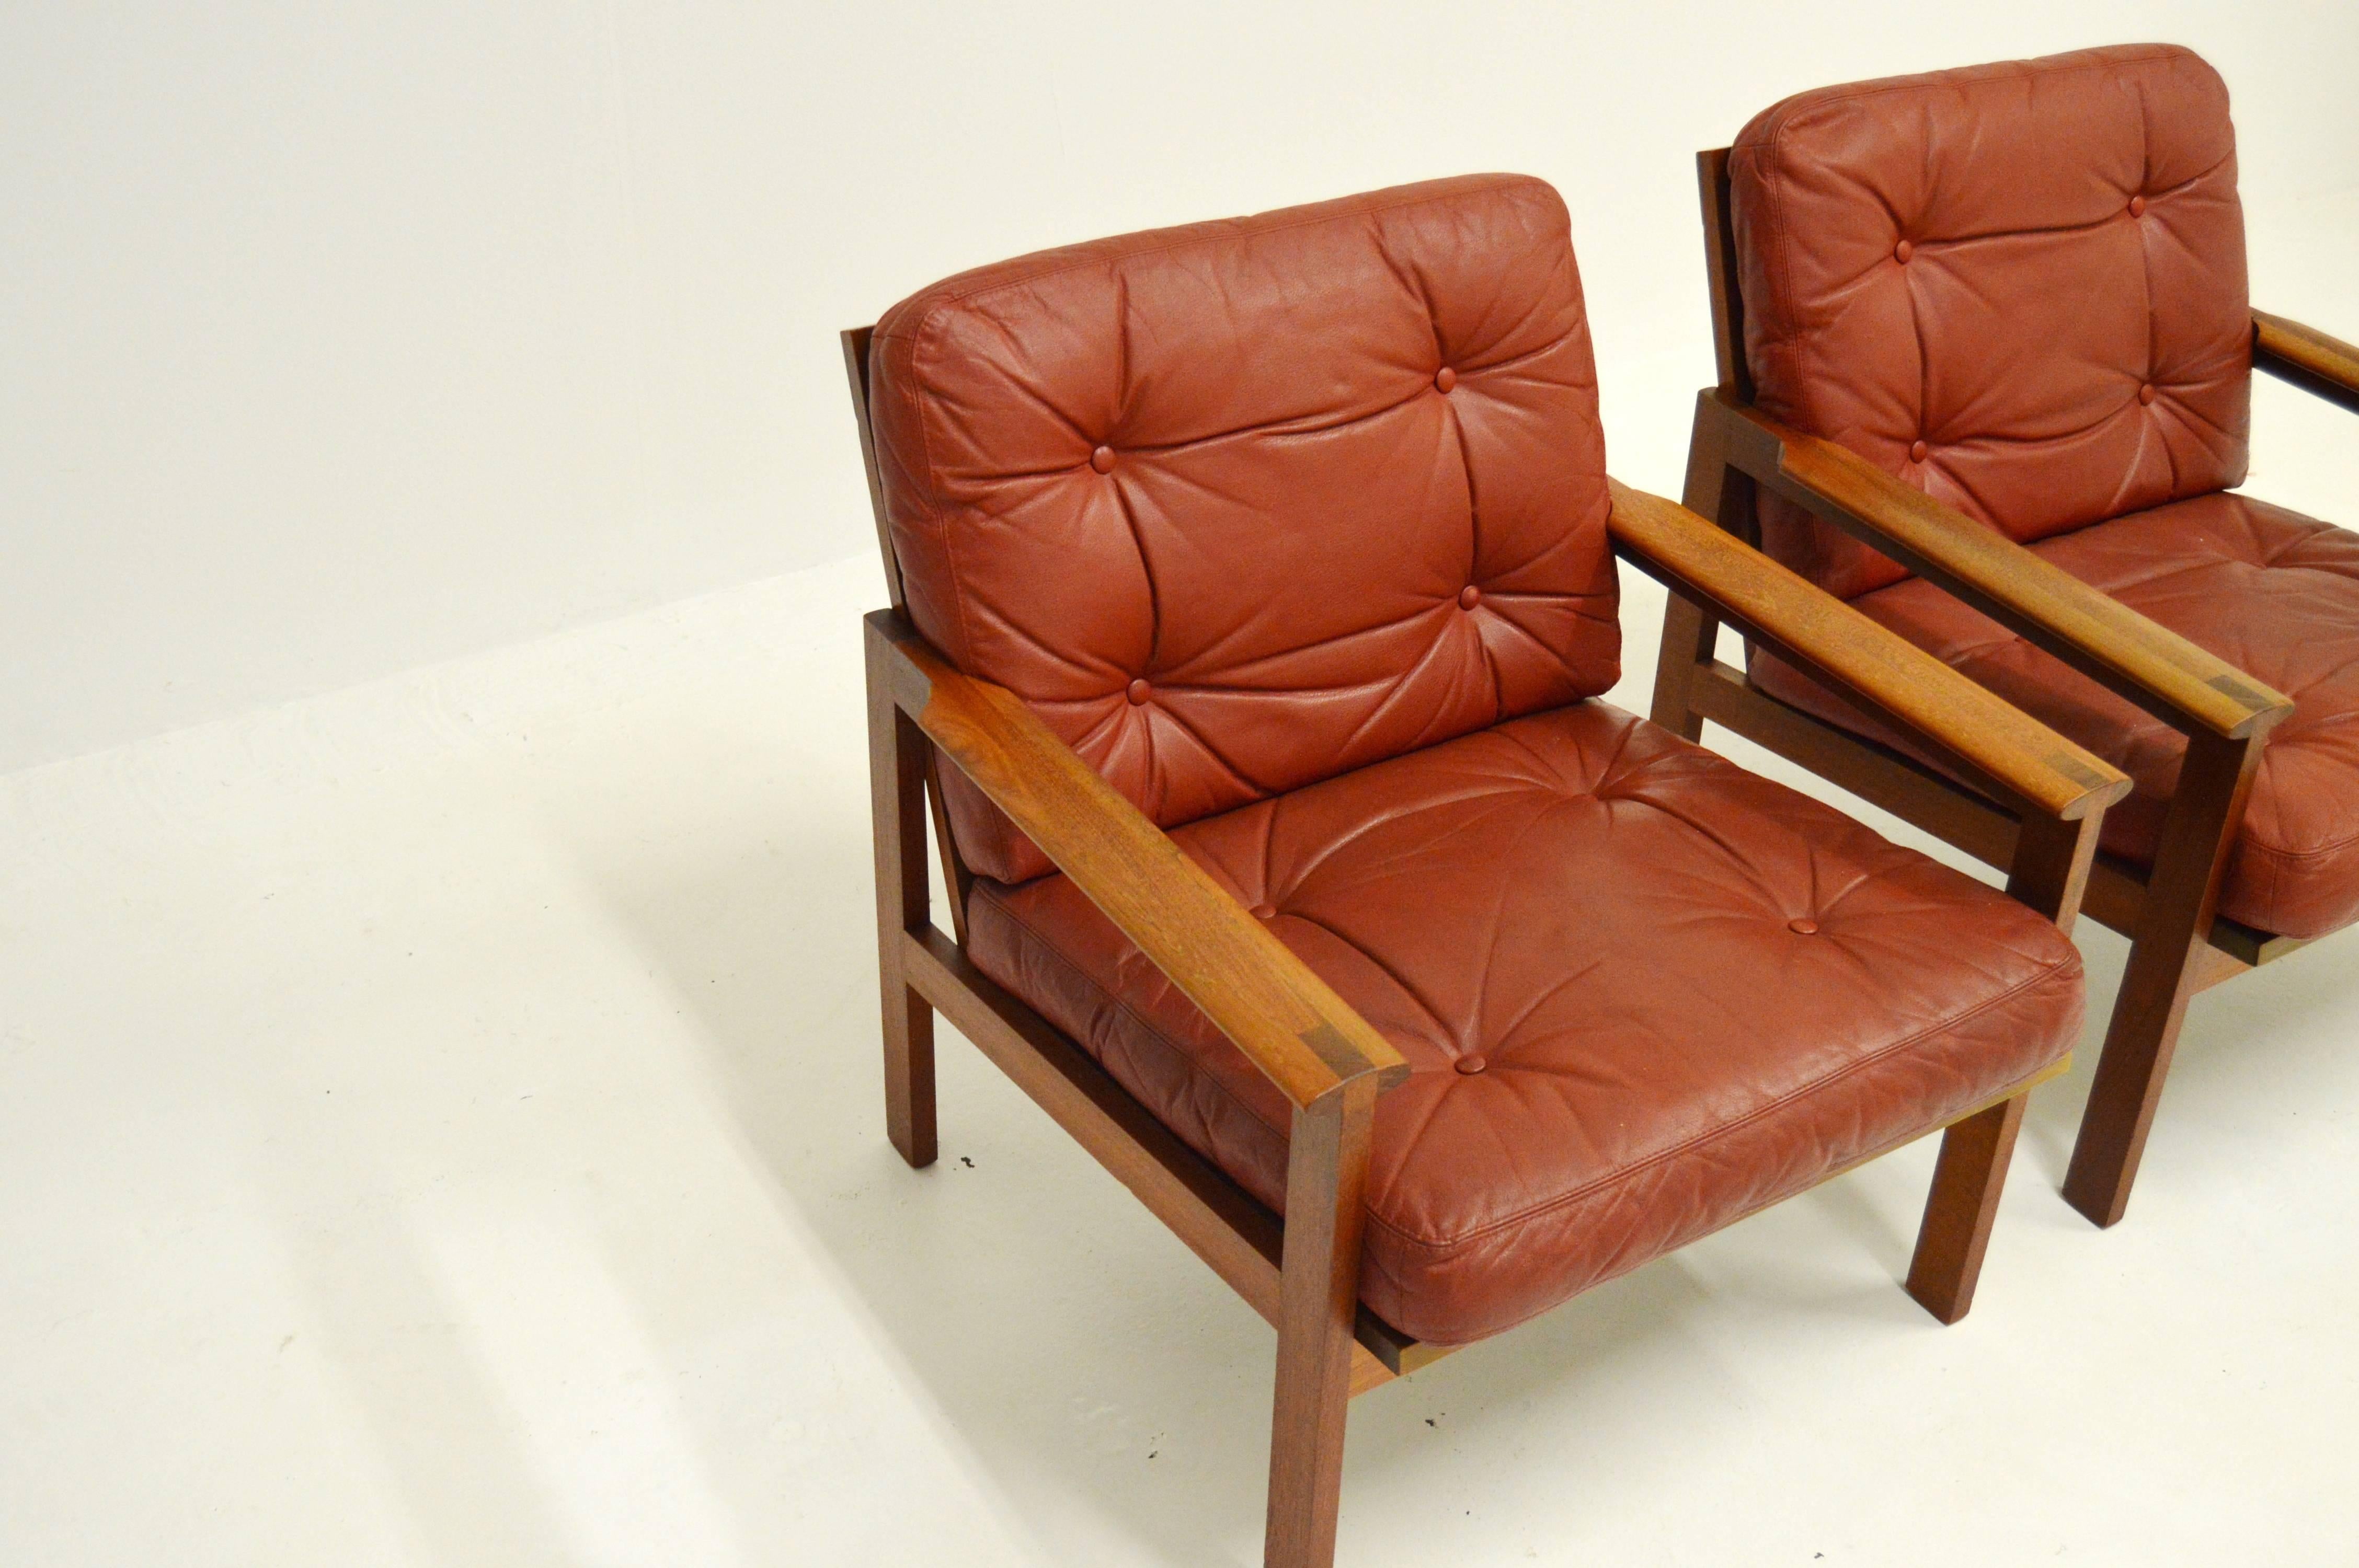 20th Century Pair of Teak Easy Chairs from Niels Eilersen Denmark by Illum Wikkelso 